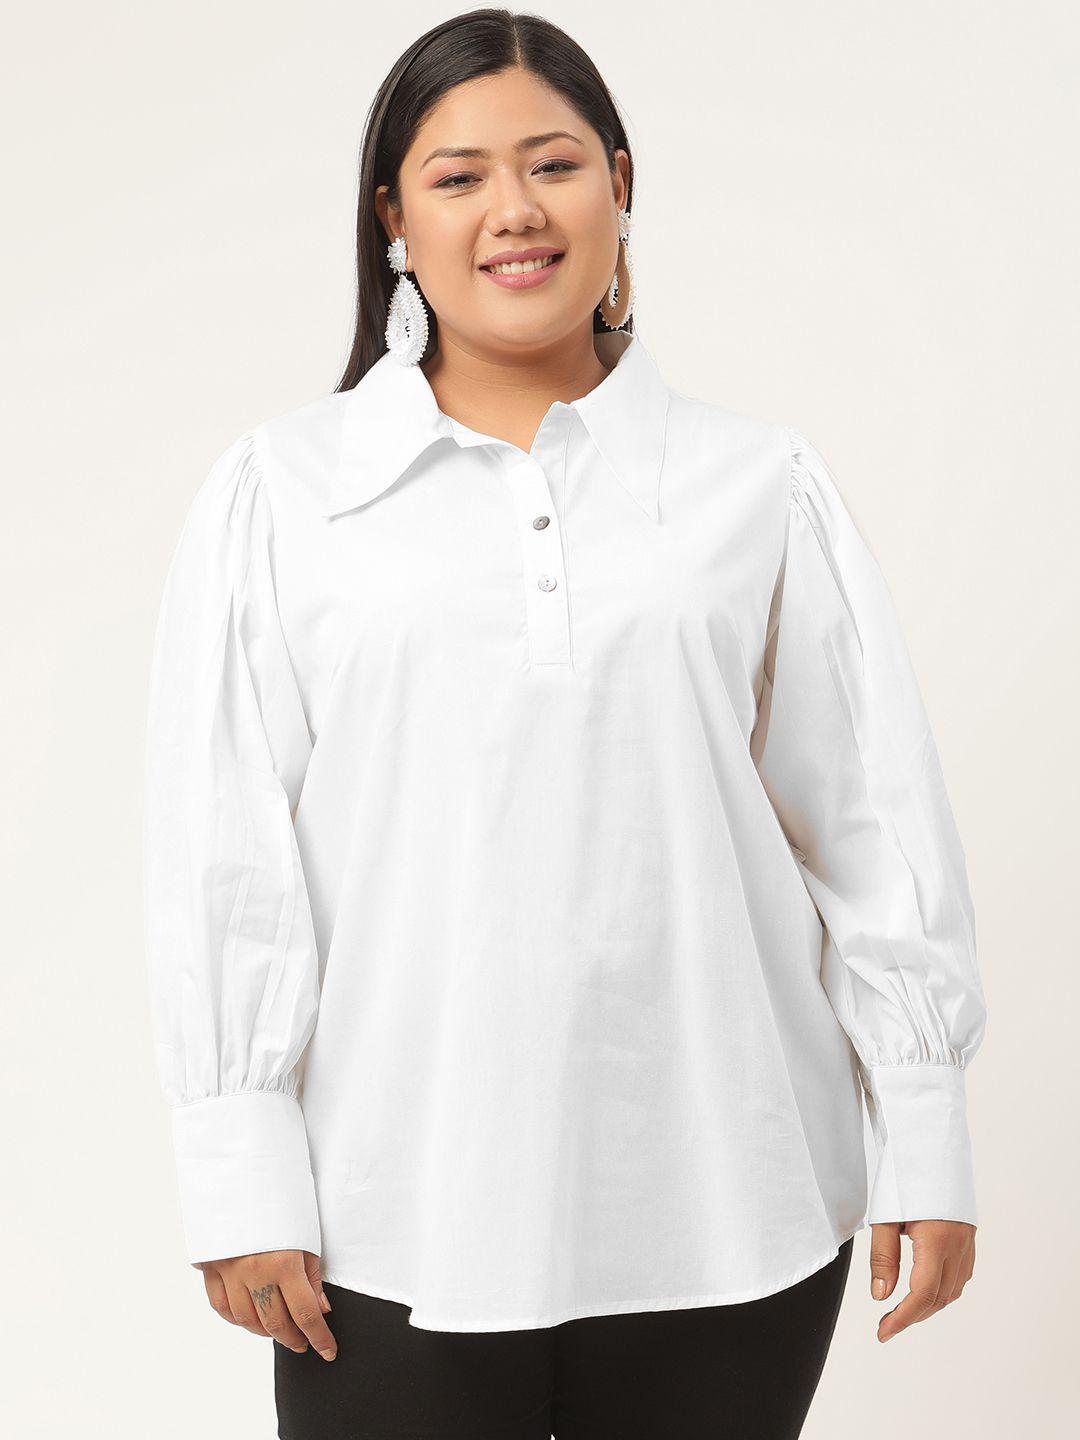 revolution white shirt style plus size top